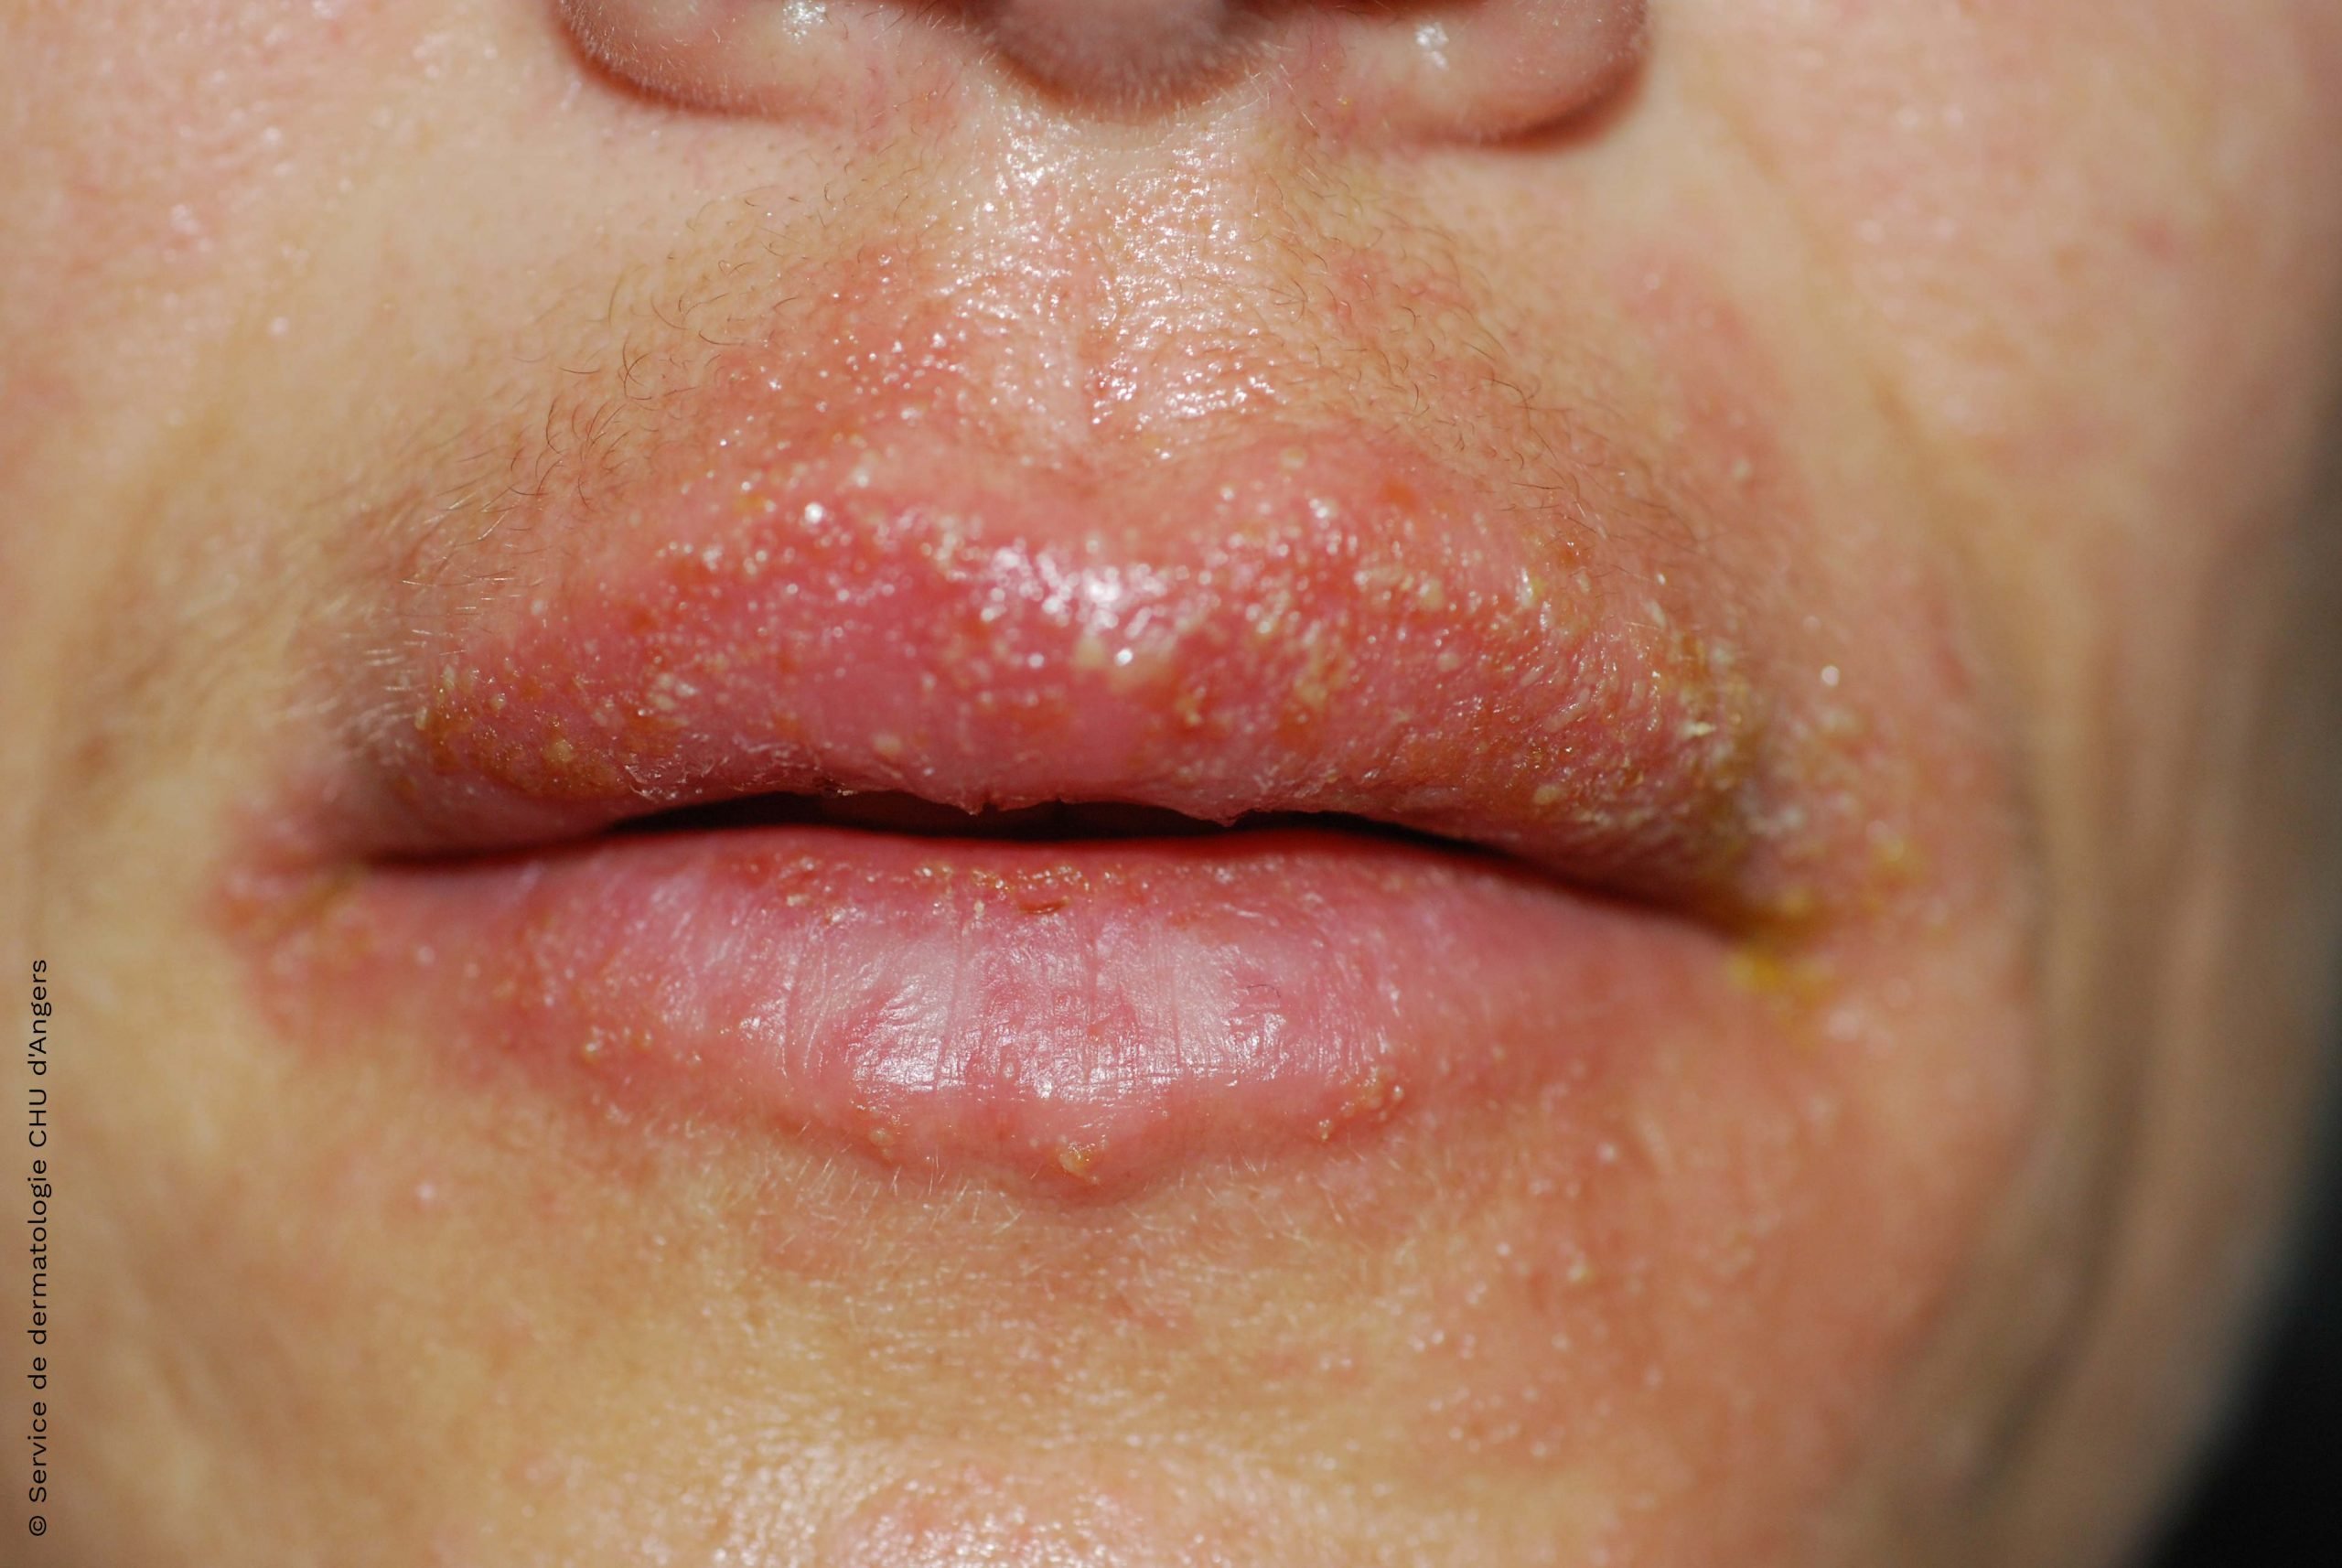 Eczema around the mouth